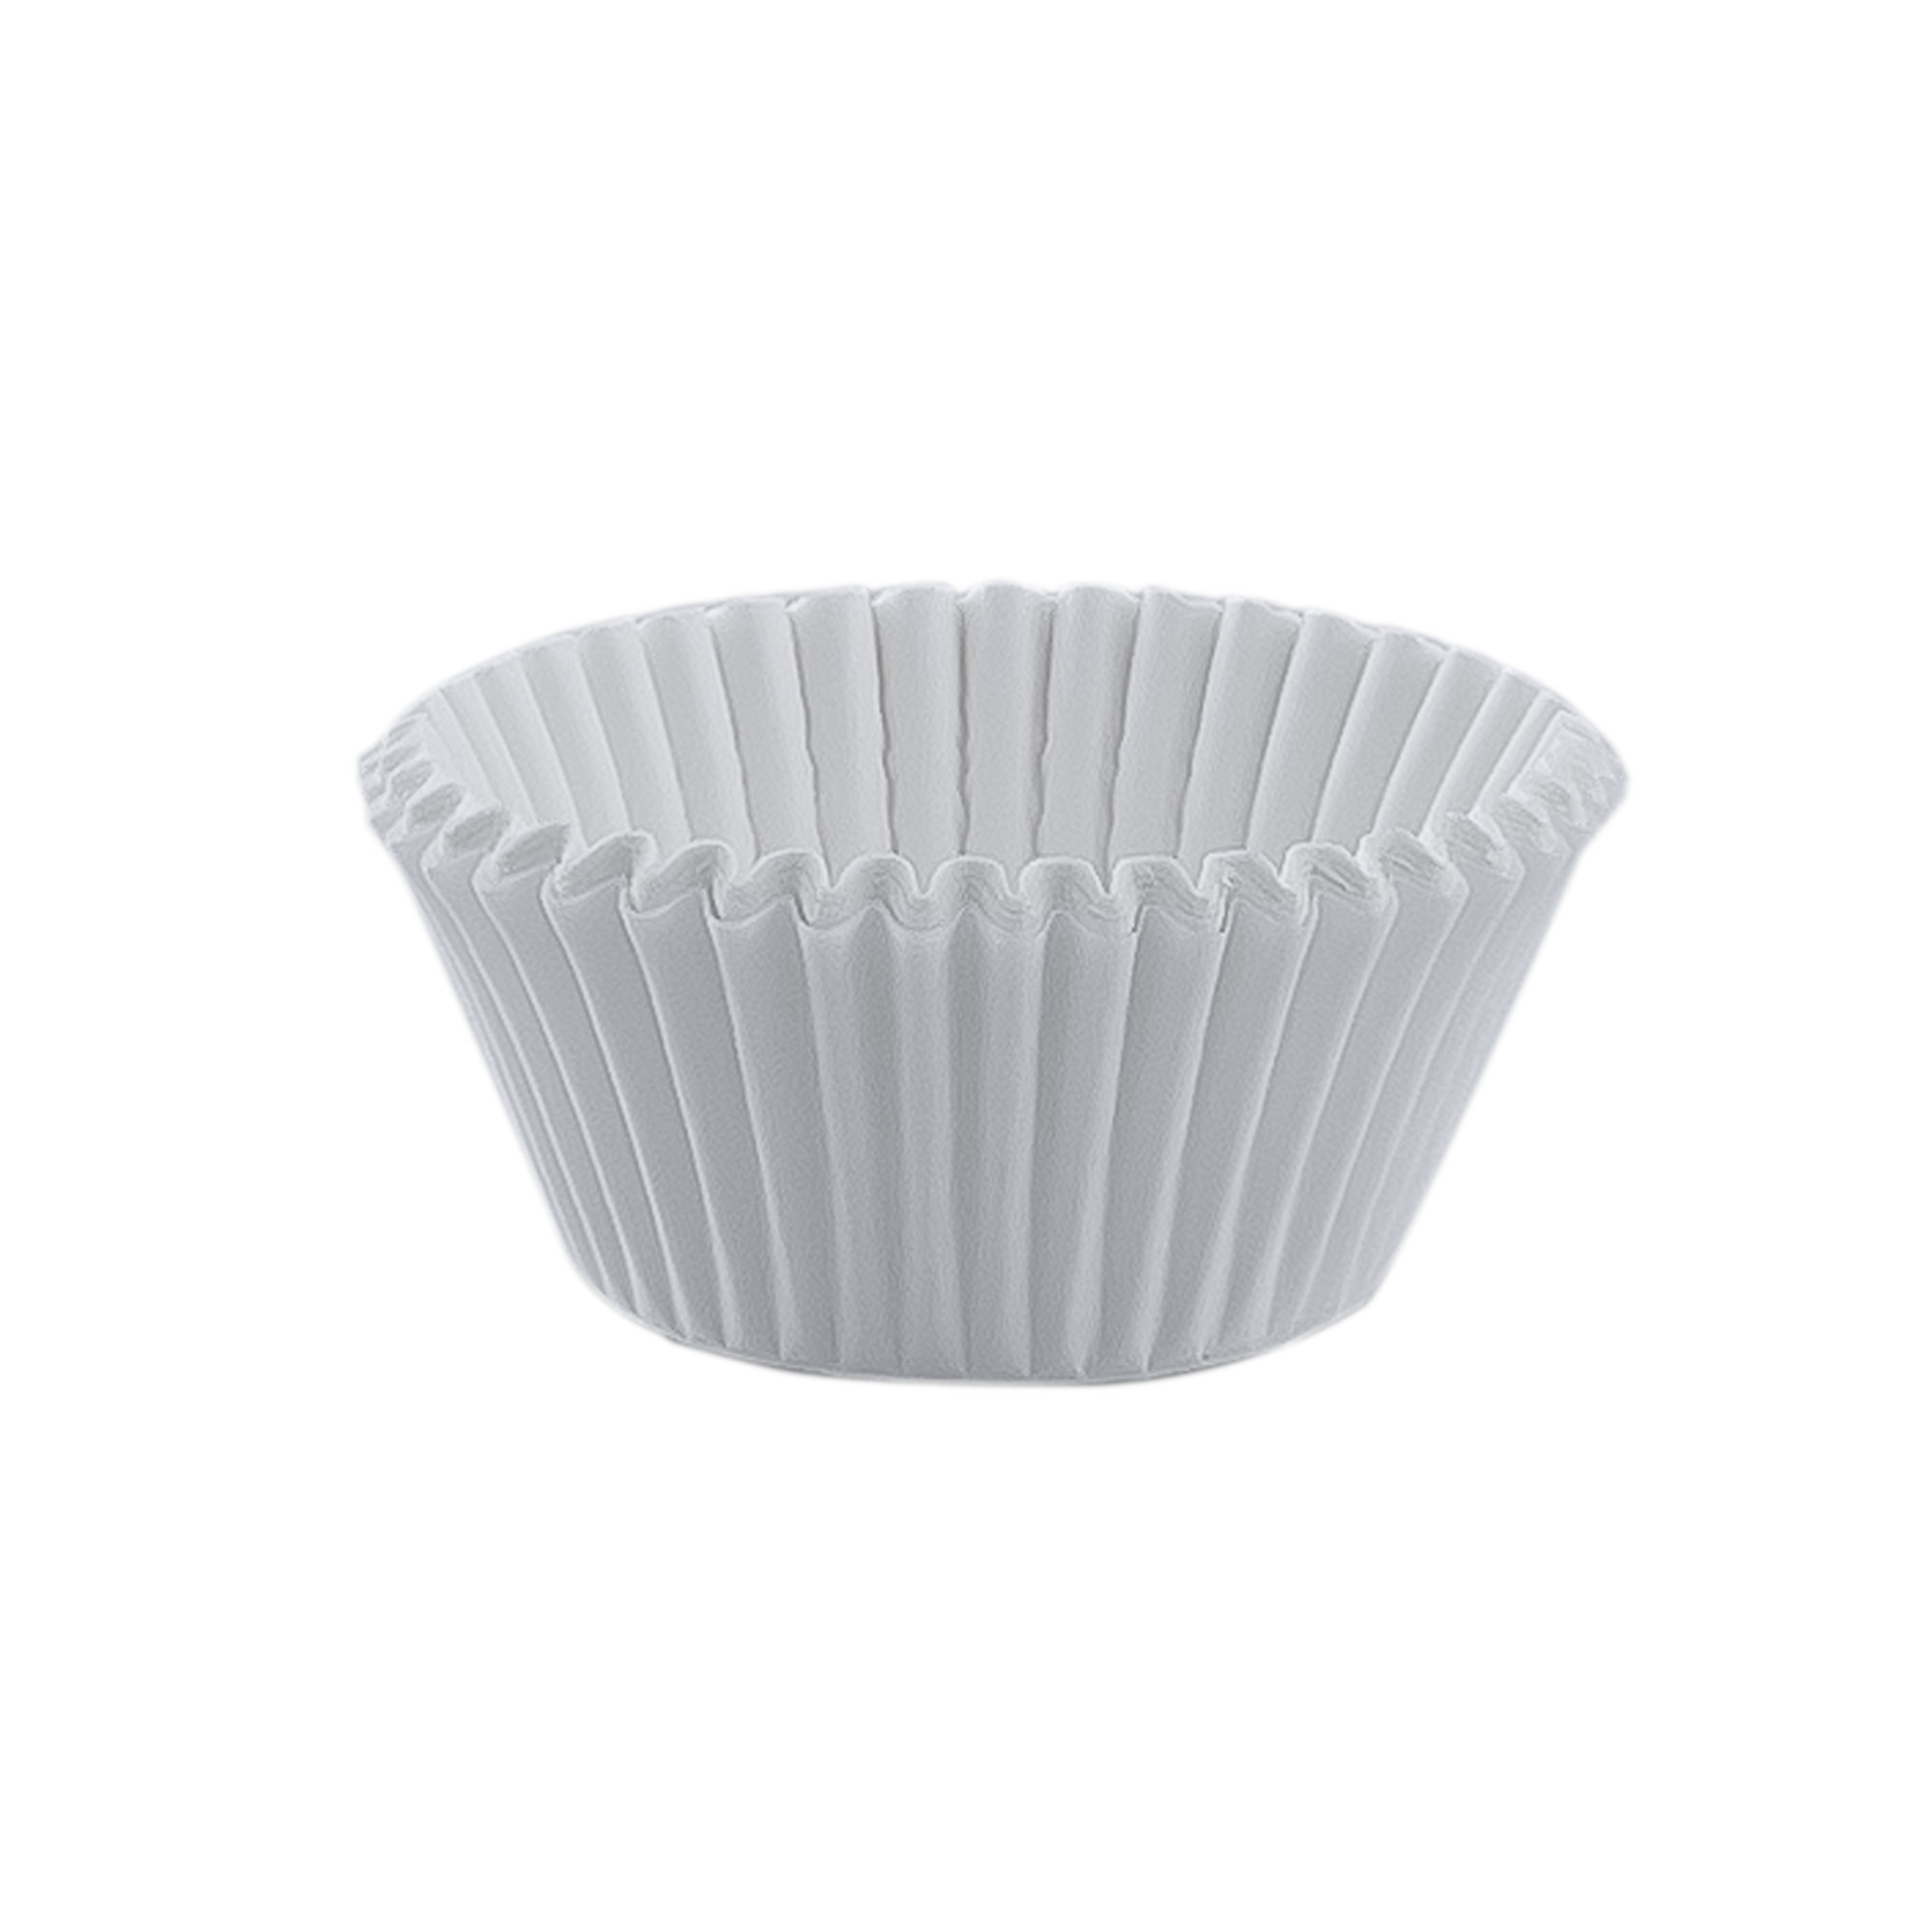 Cupcake Baking Cups (White Colour)